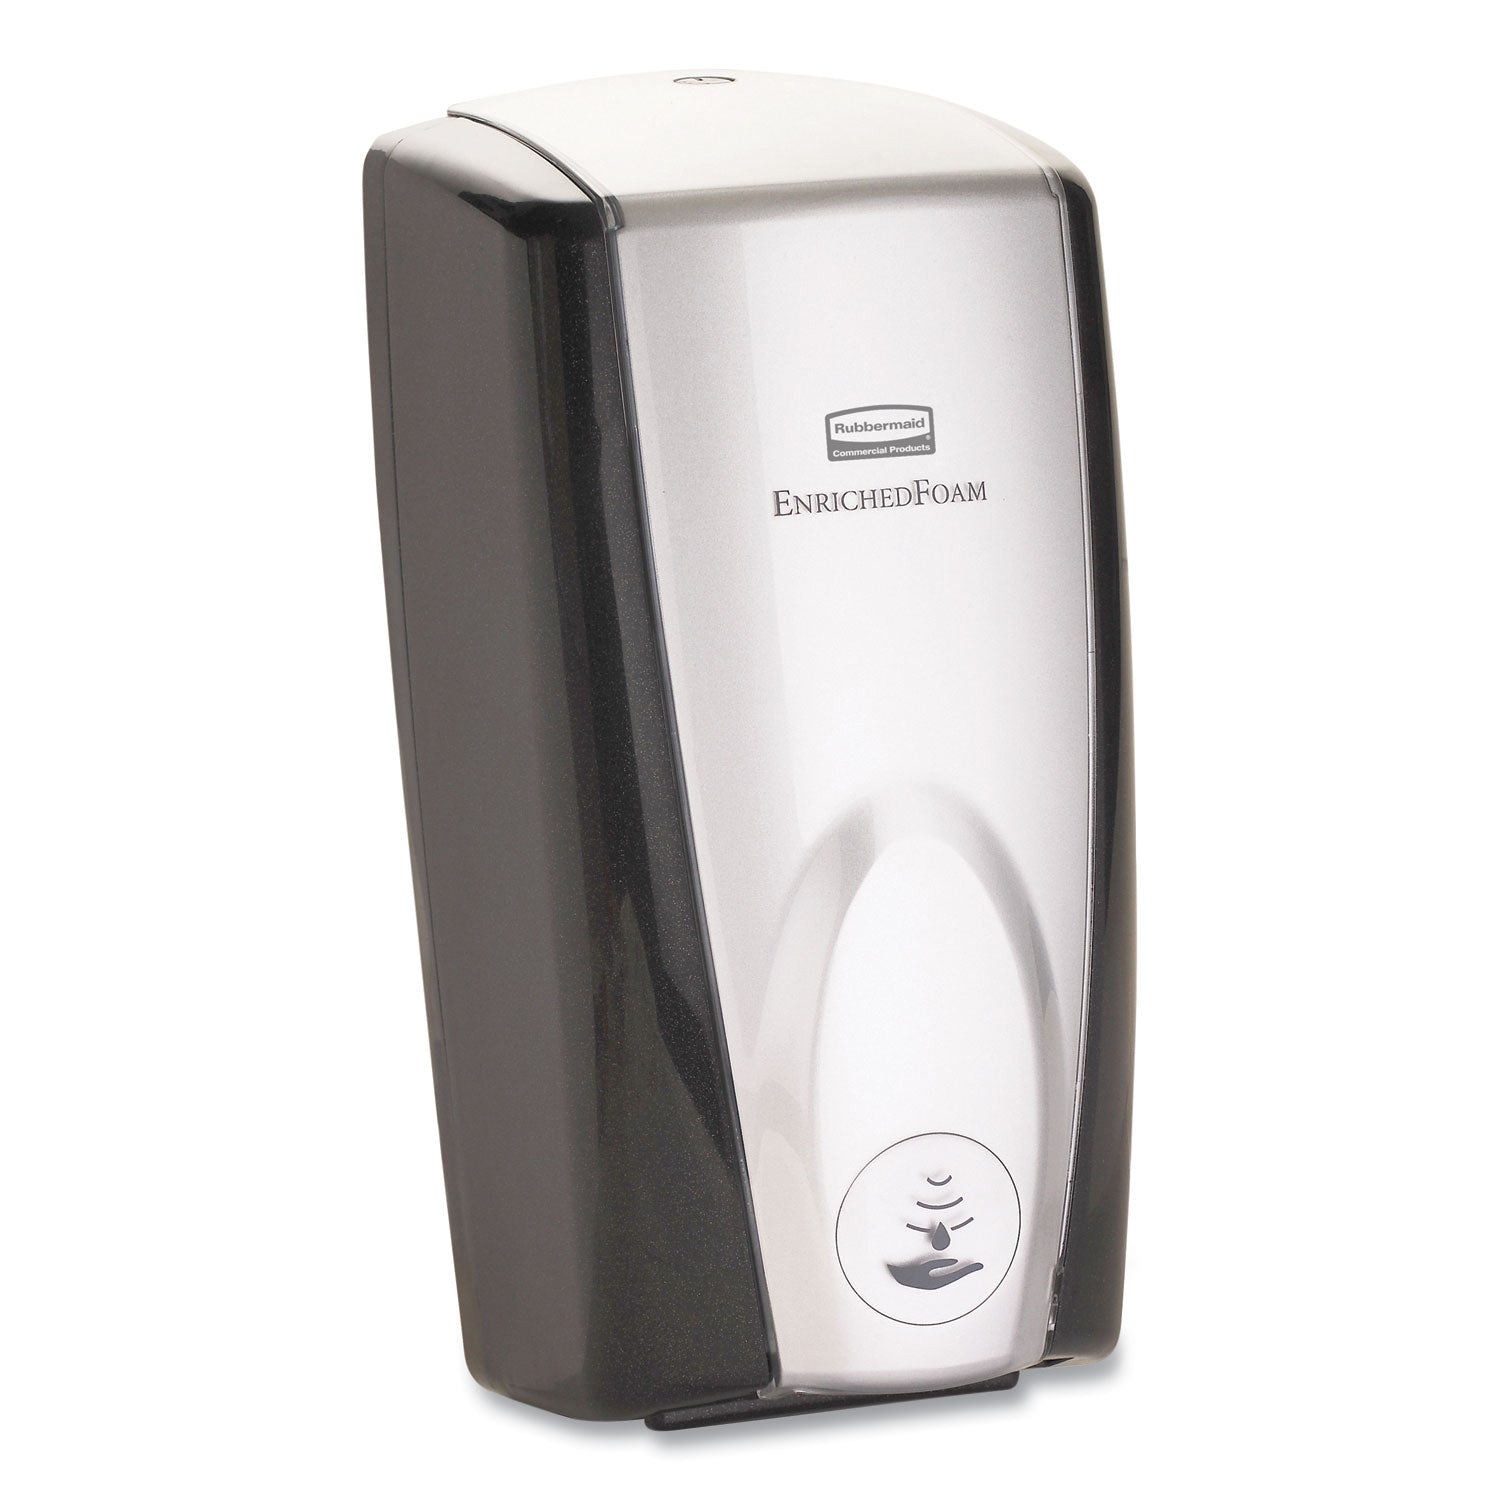 AutoFoam Touch-Free Dispenser, 1,100 mL, 5.2 x 5.25 x 10.9, Black/Chrome - 